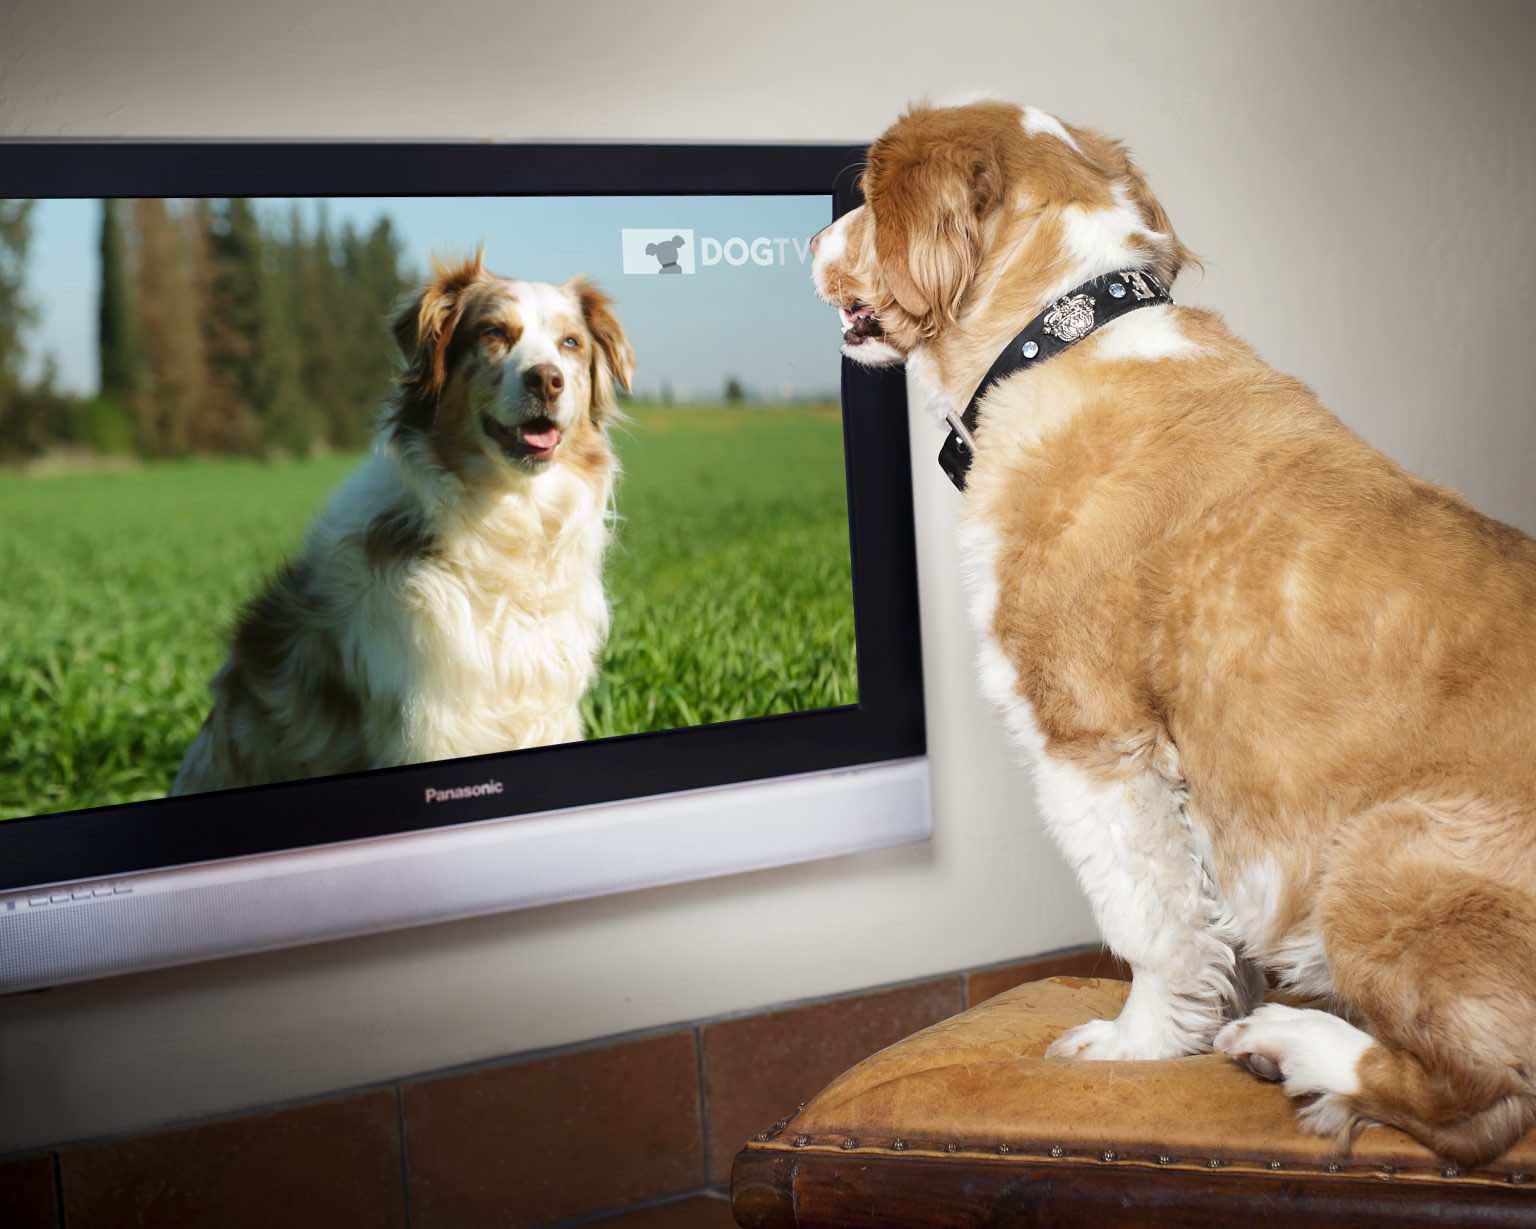 dog trainer on tv